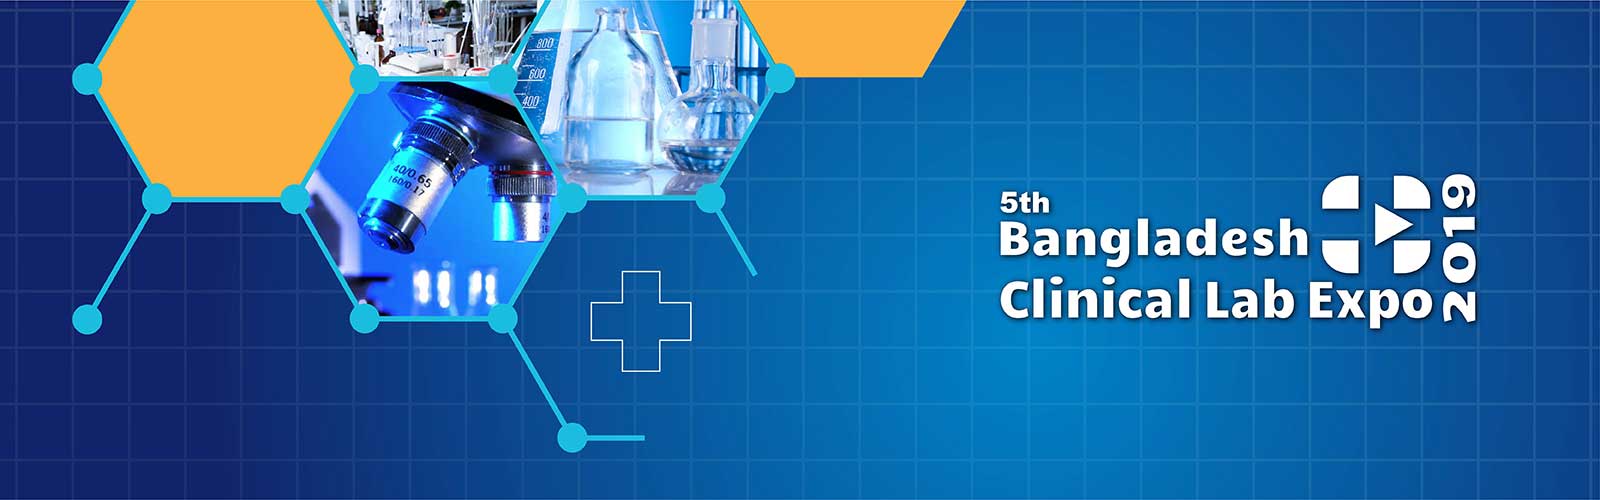  5th Bangladesh Clinical Lab Expo 2019